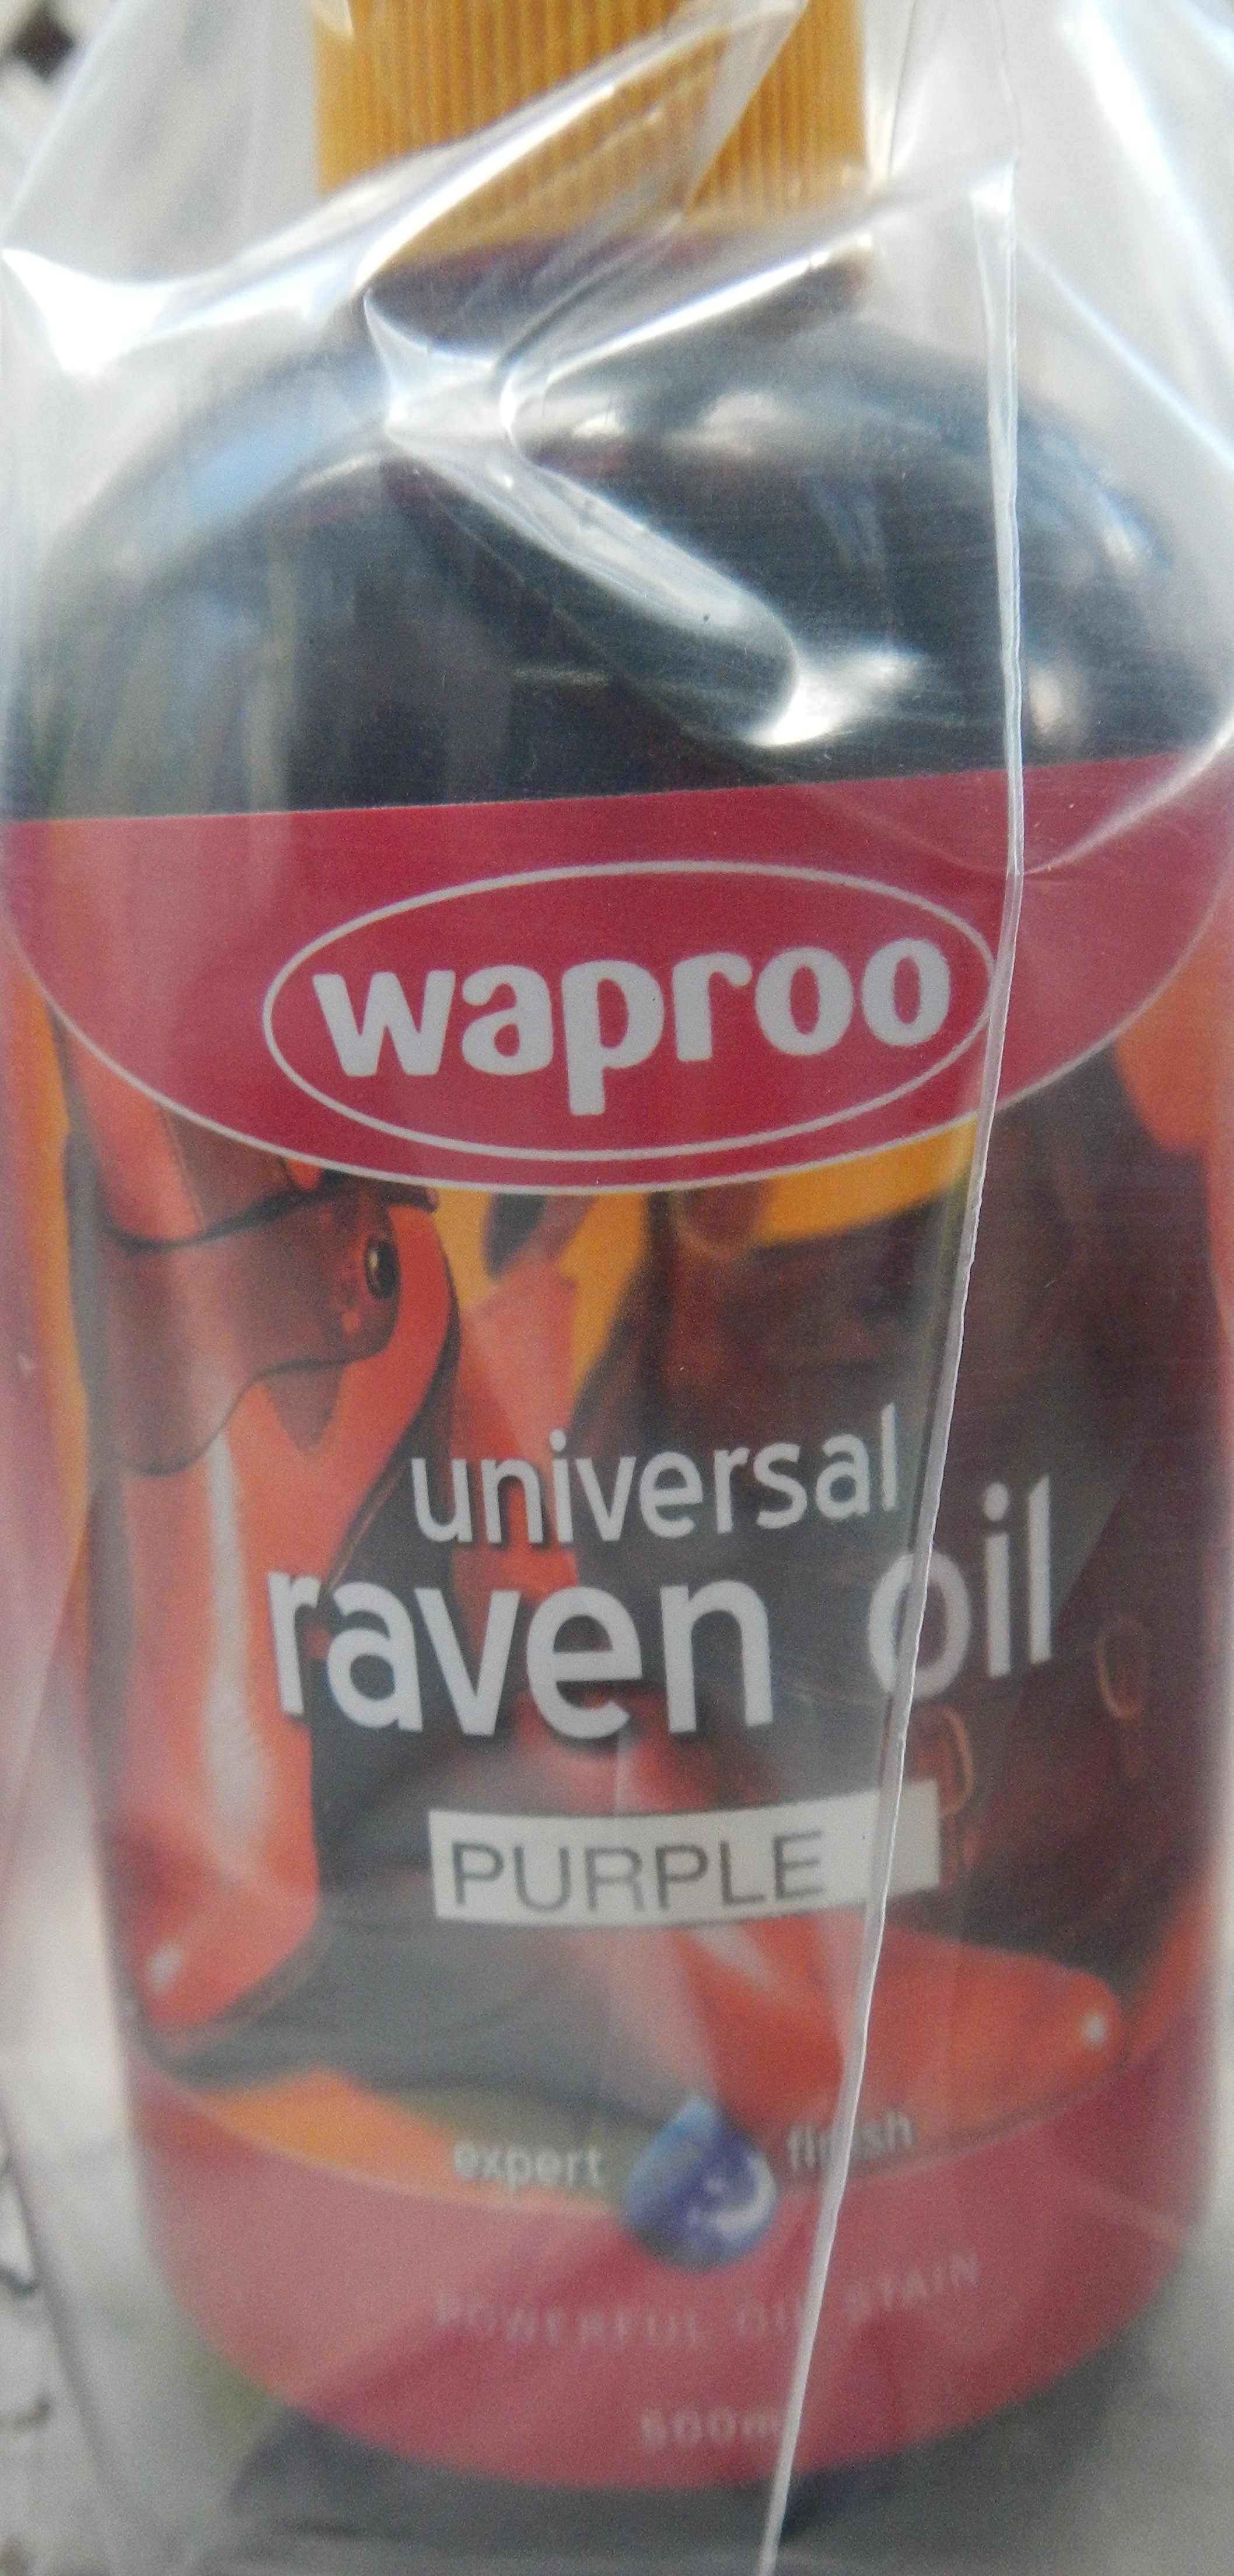 raven Oil Purple